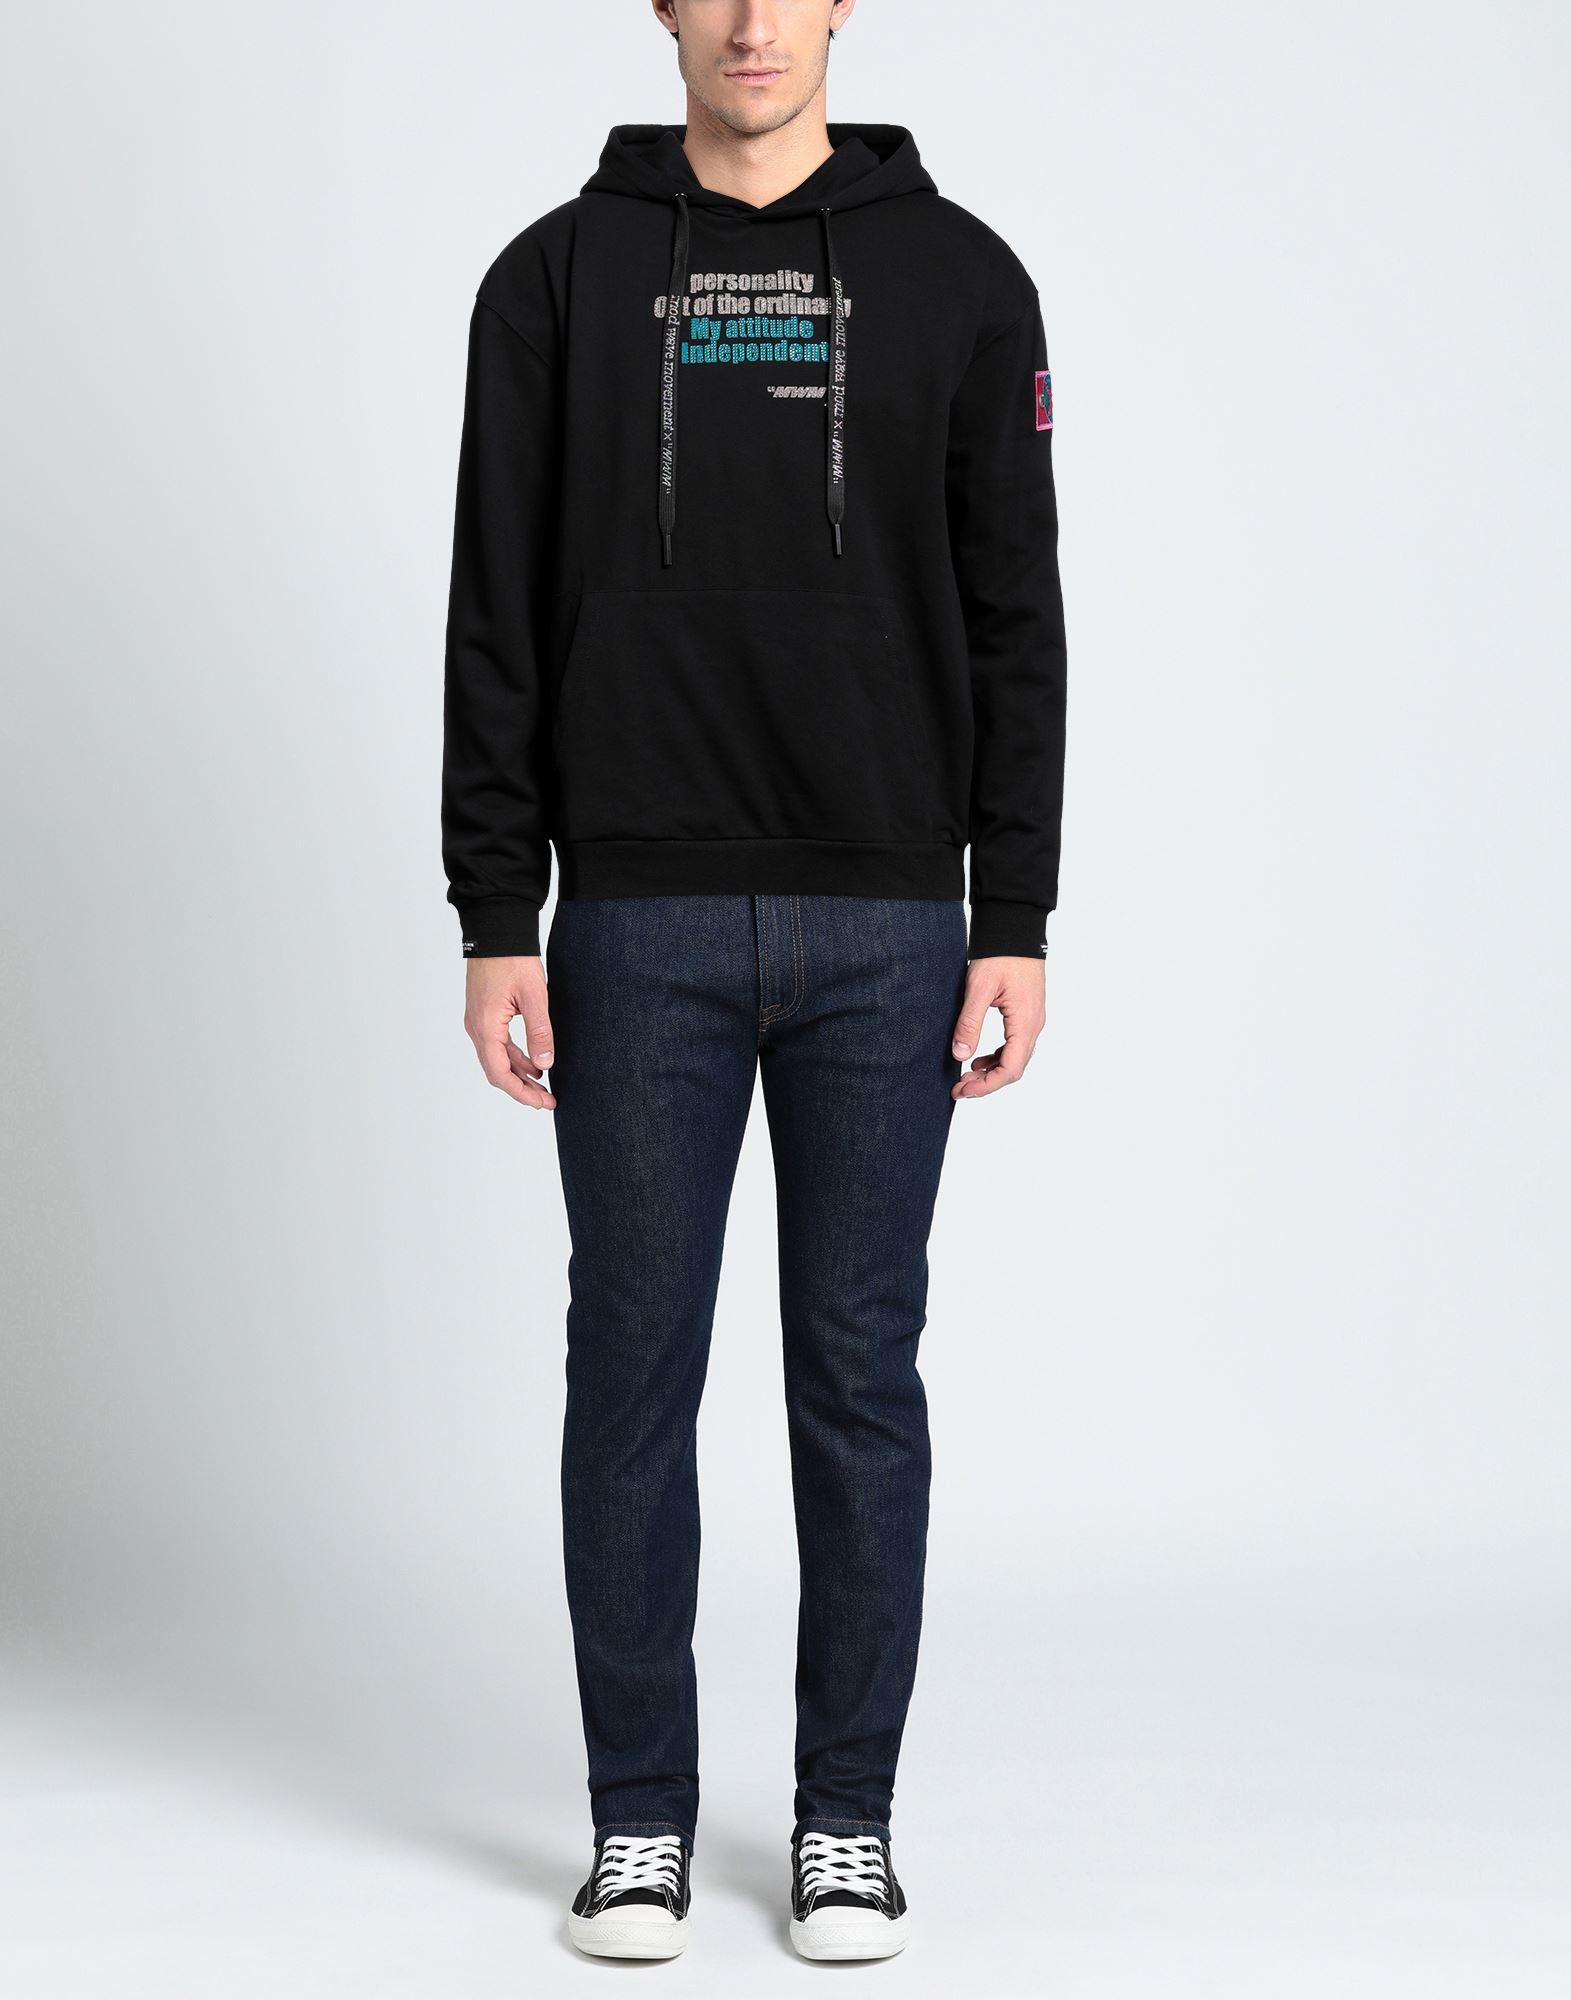 MWM - MOD WAVE MOVEMENT Sweatshirt in Black for Men | Lyst